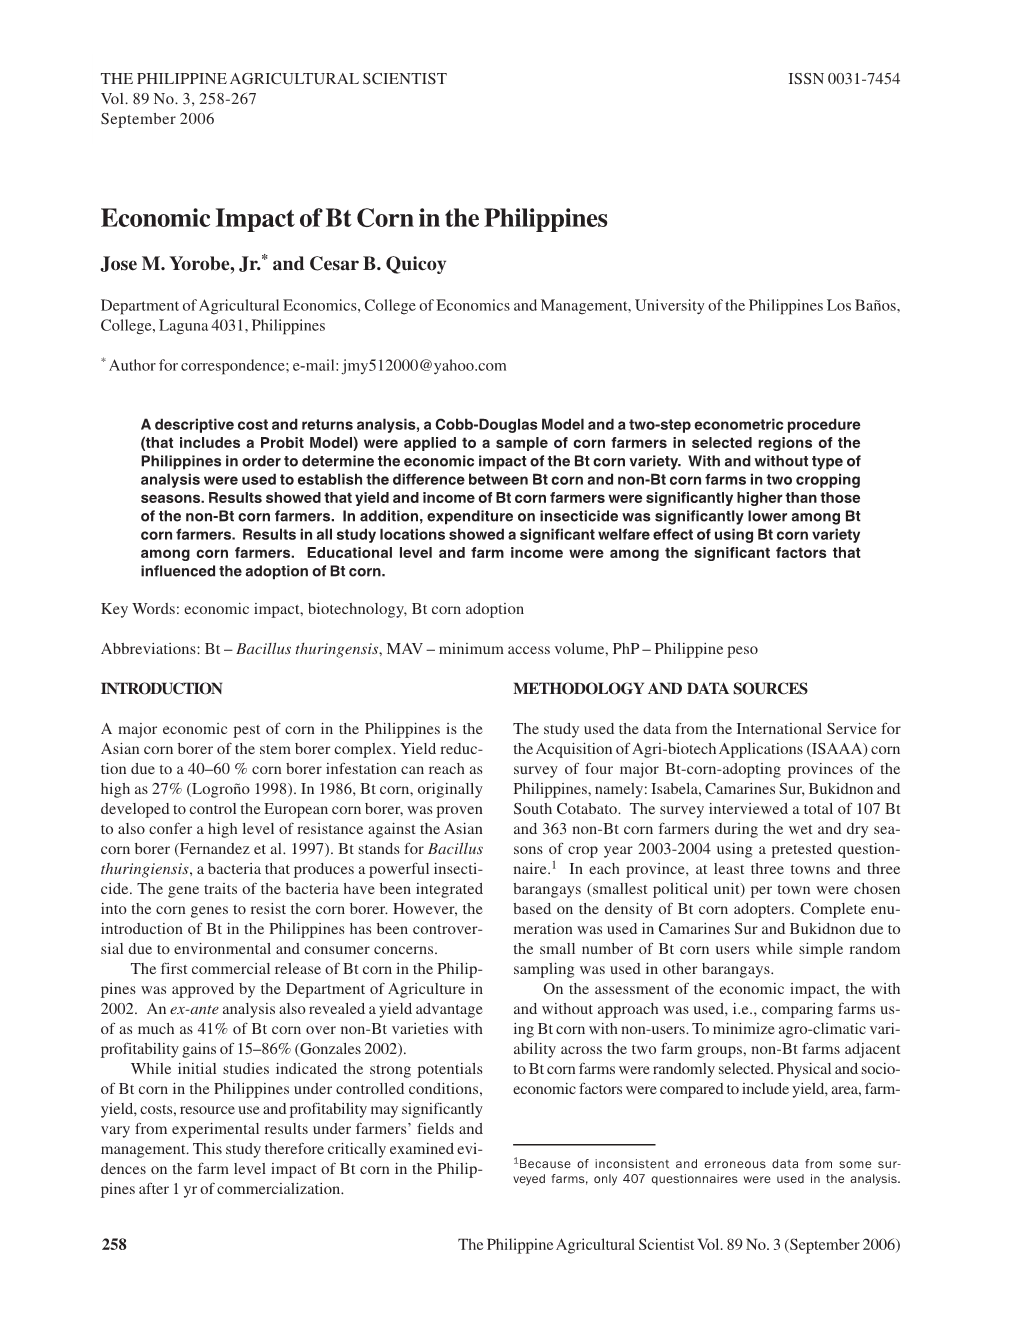 Economic Impact of Bt Corn in the Philippines